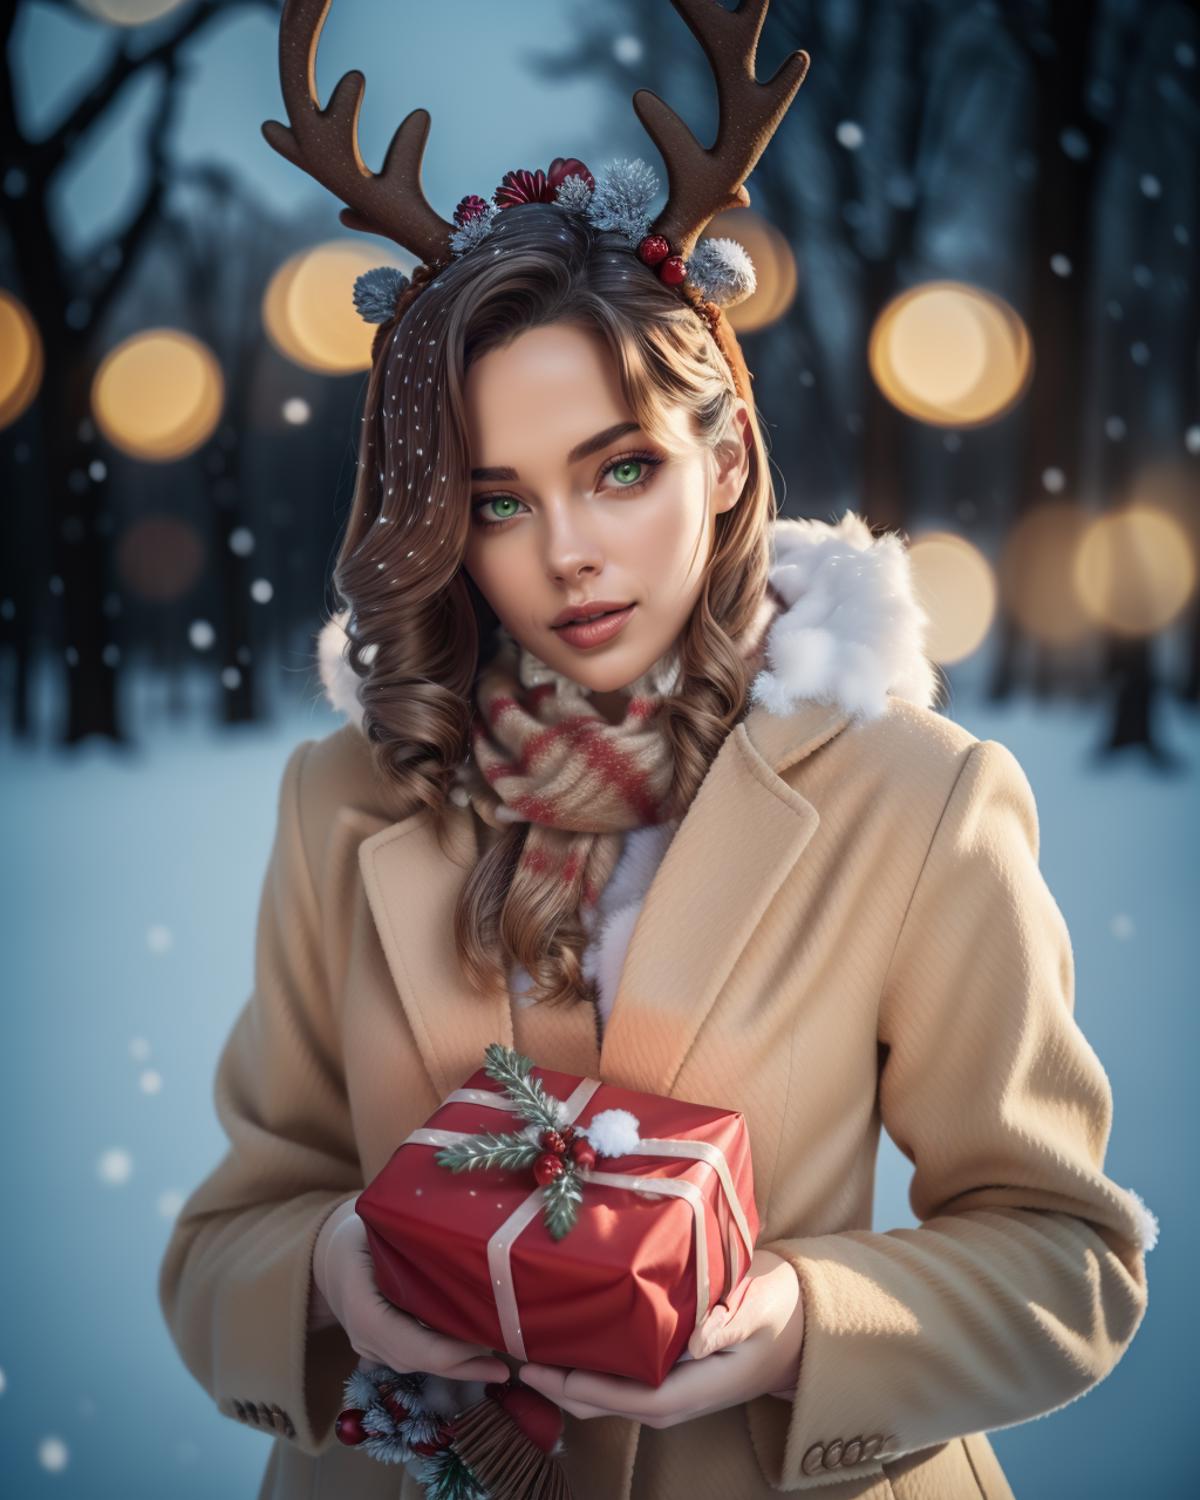 Stupid Christmas Antlers image by Sophorium